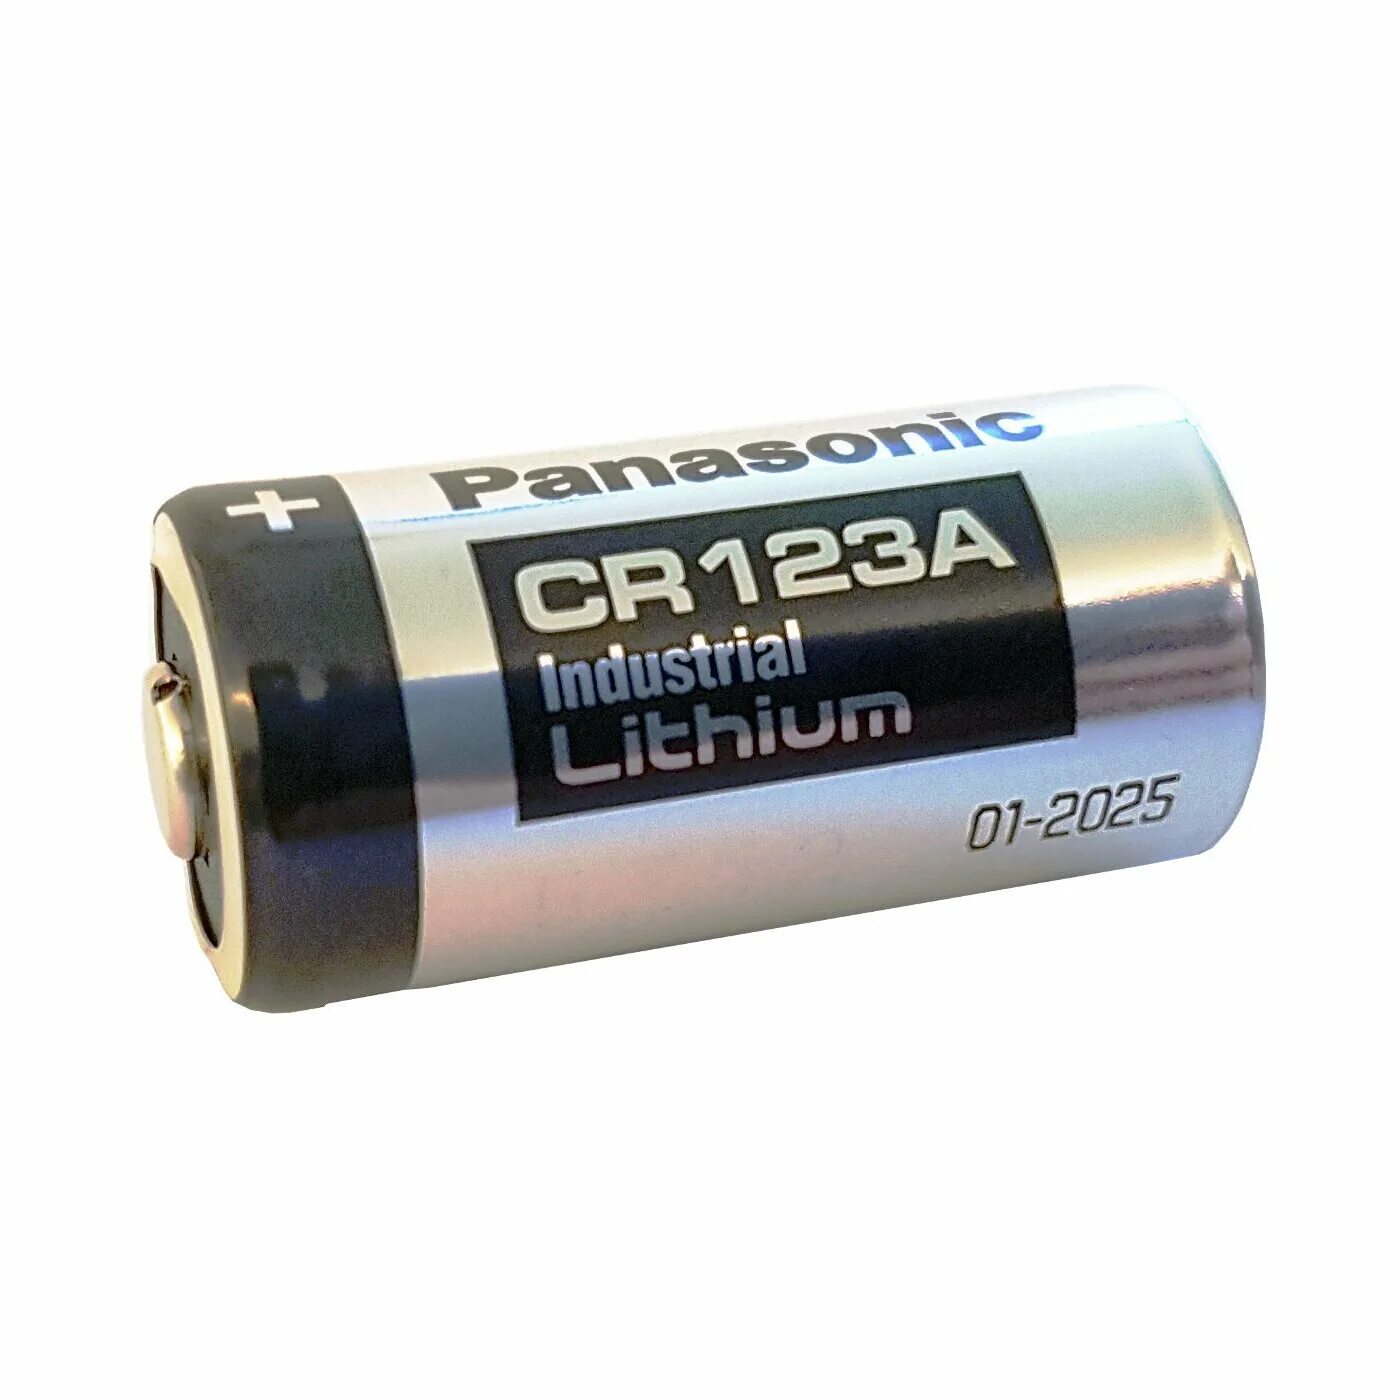 Cr123a батарейка купить. Panasonic CR-123 Lithium. Panasonic cr123a Industrial Lithium. Cr123a батарейка. Panasonic Lithium 123a.